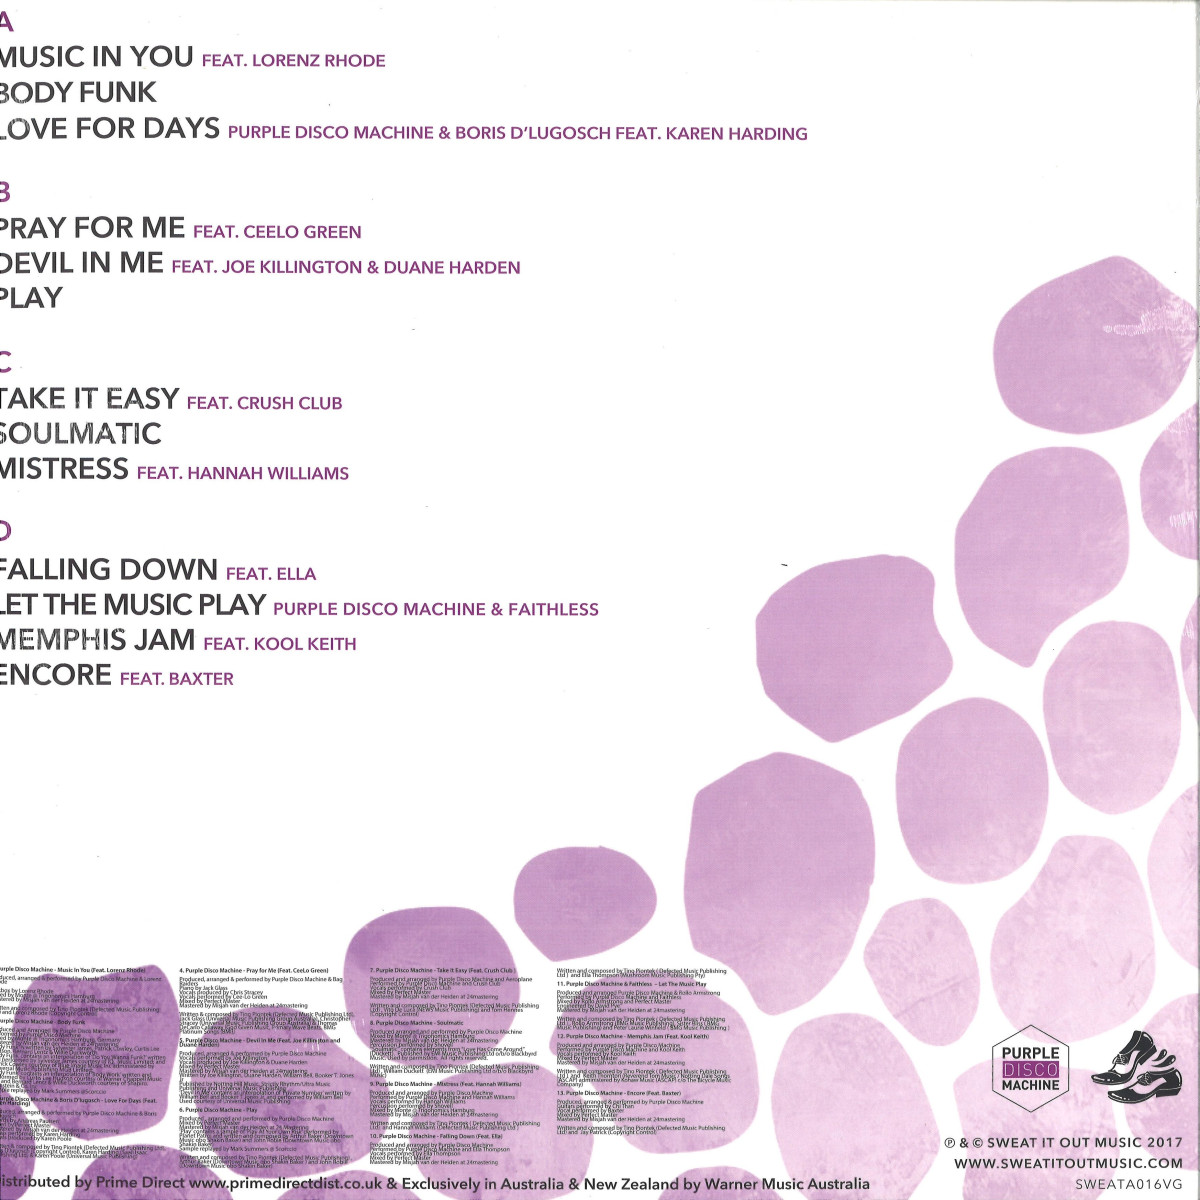 Purple Disco Machine - Soulmatic LP 2x12" / SWEAT IT OUT SWEATA016VG - Vinyl